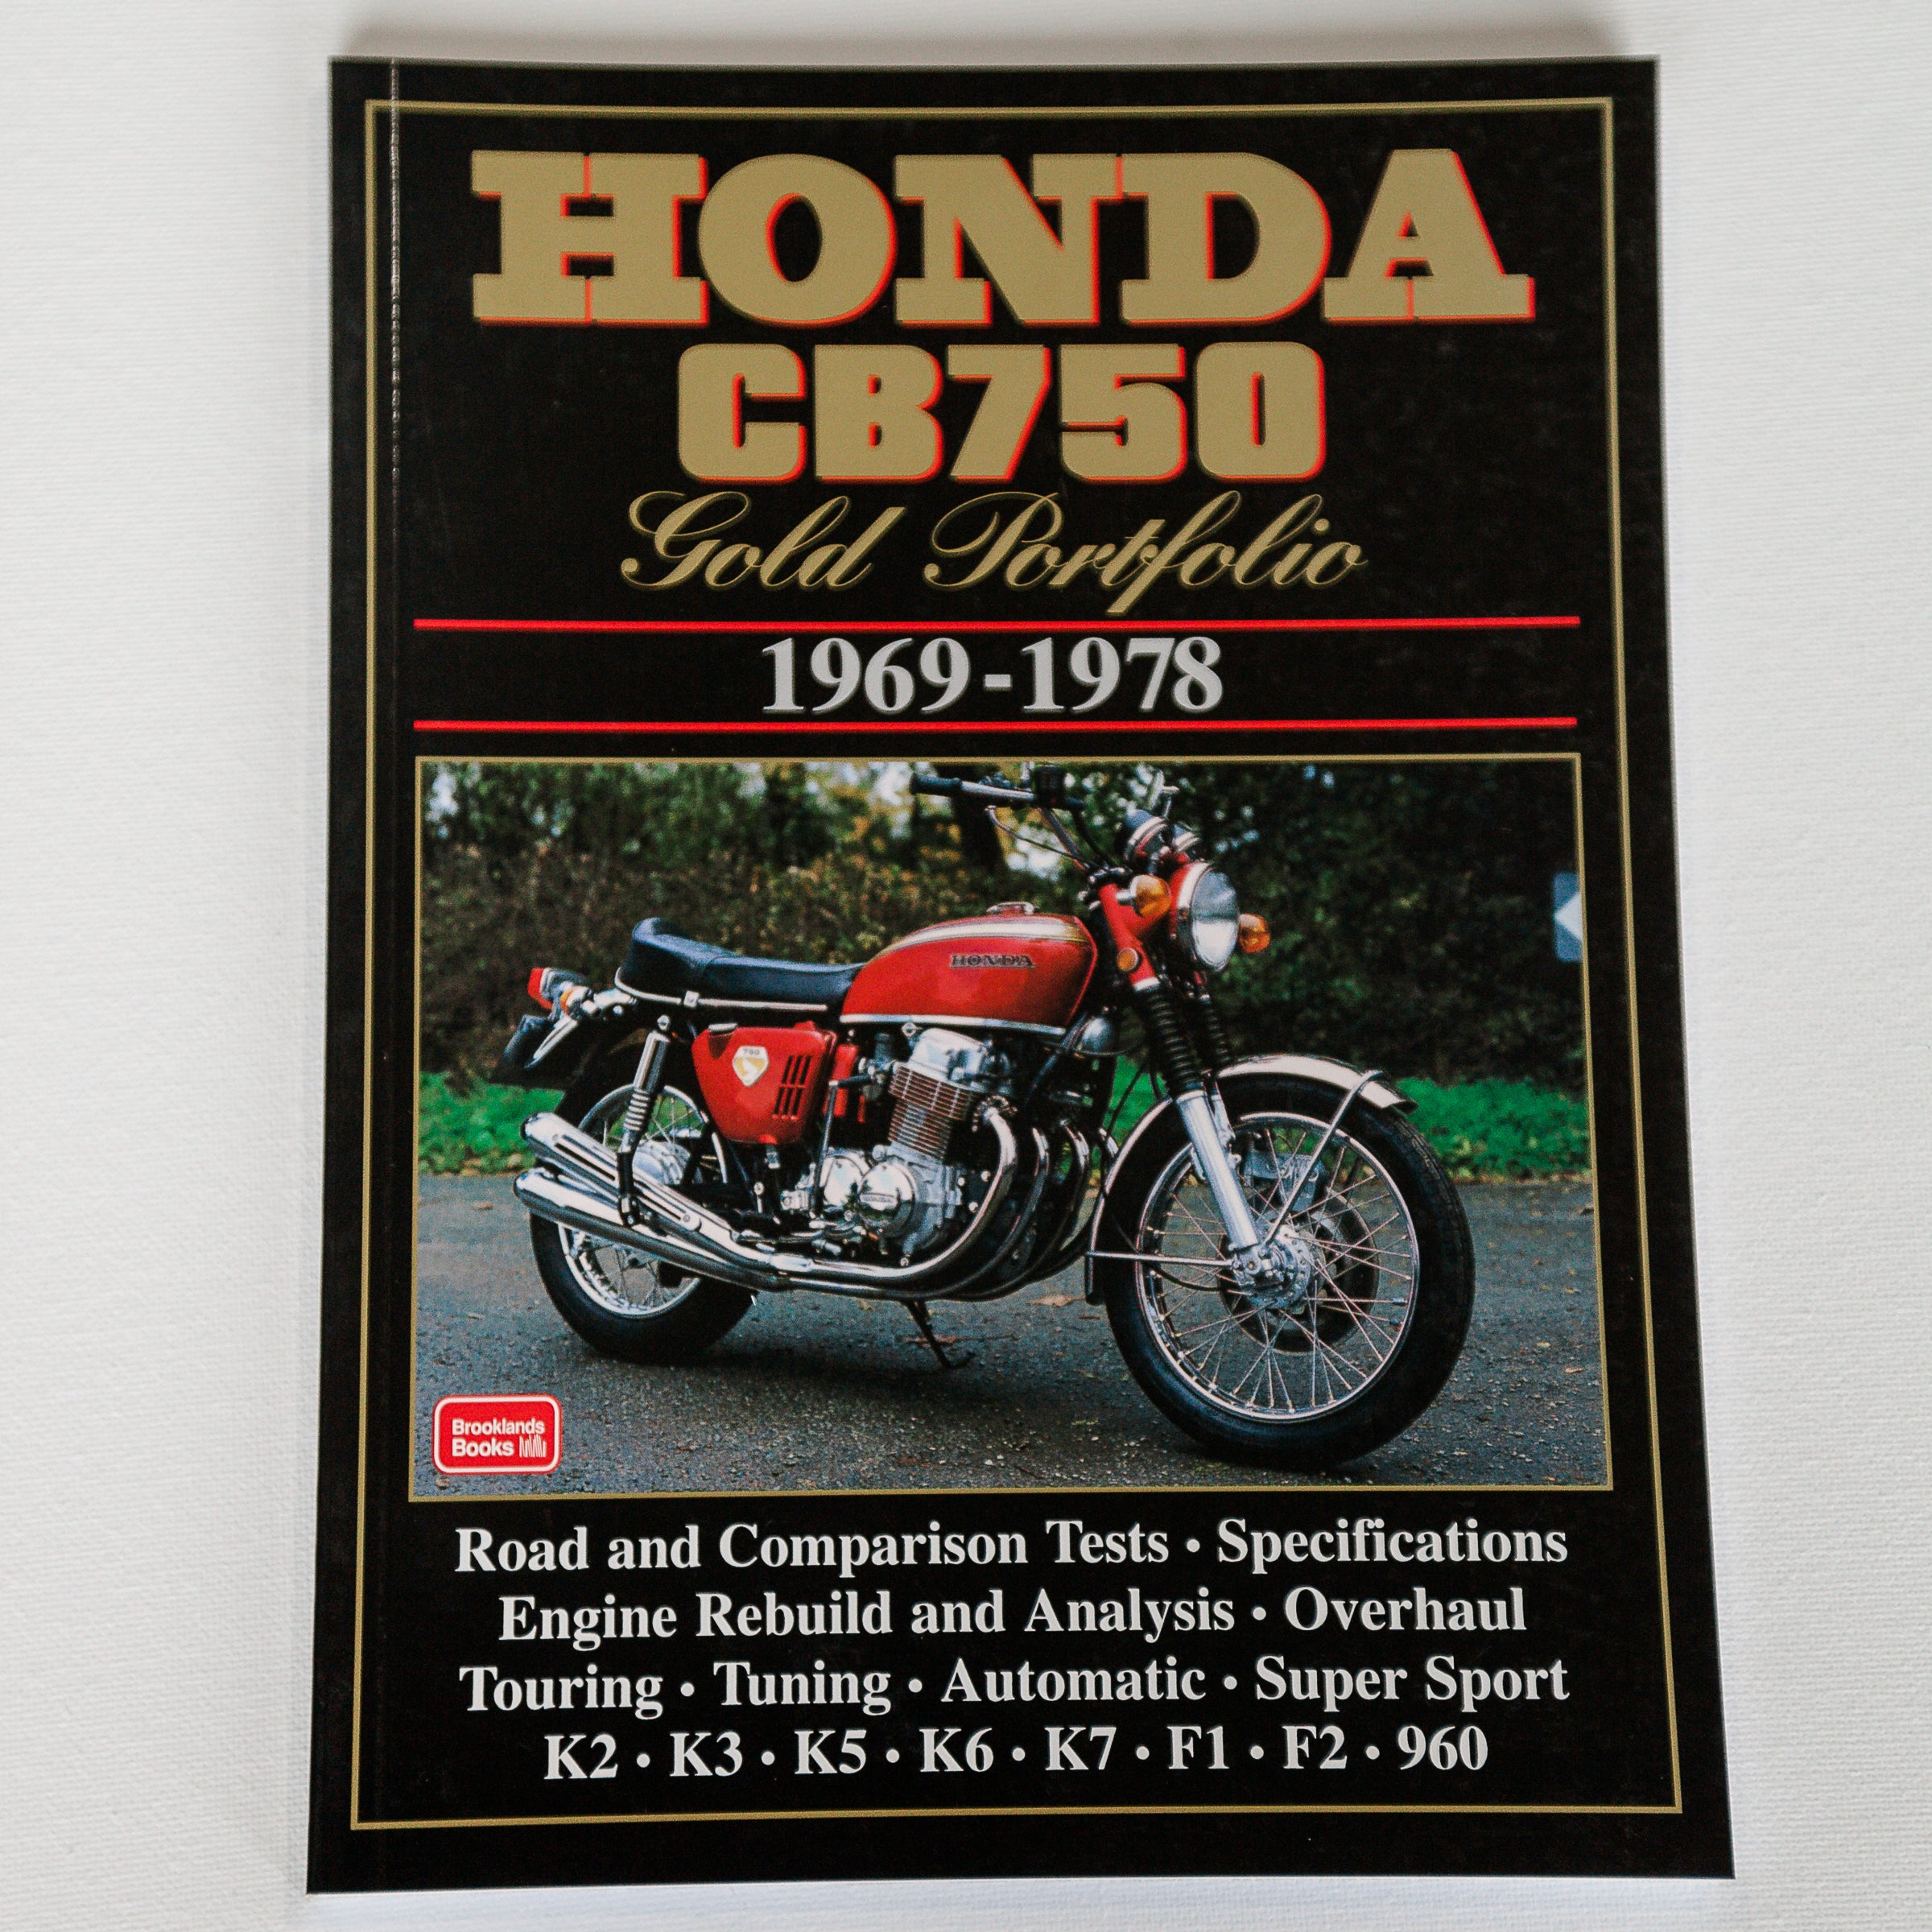 Dreamcycle Motorcycle Museum | Honda Gold Portfolio book on white background. 